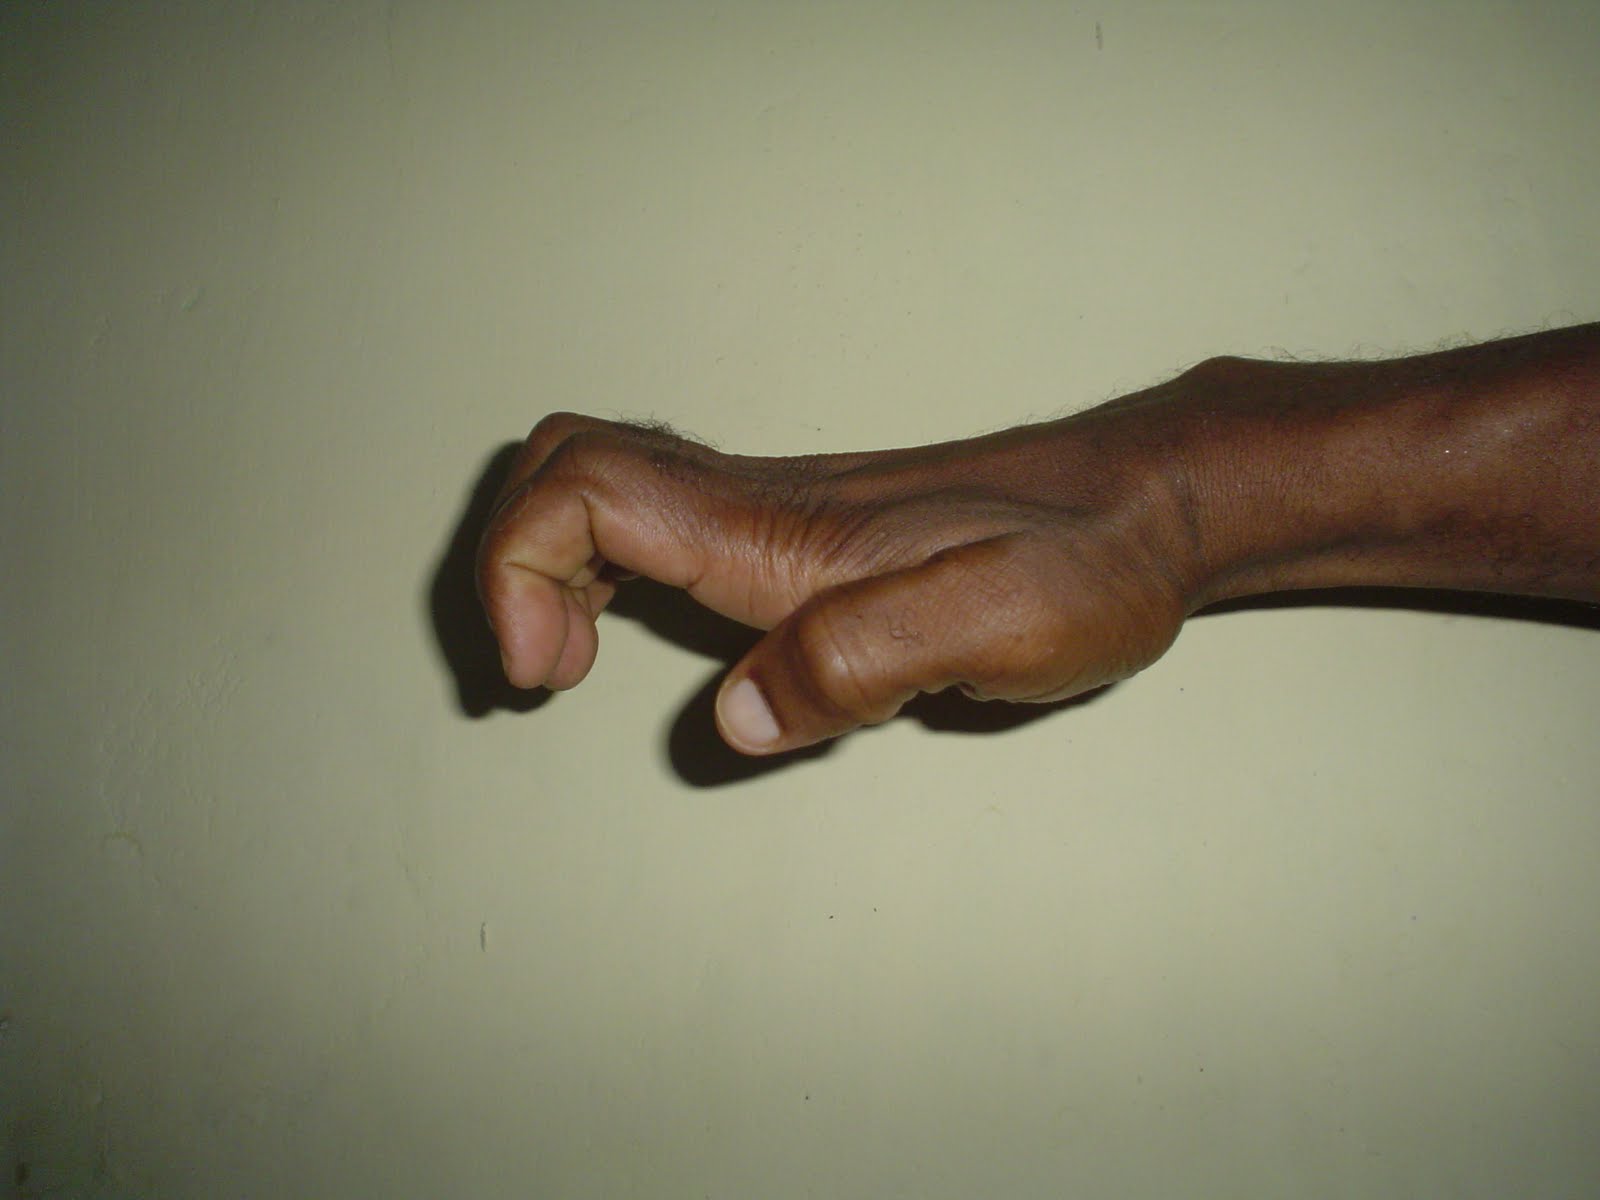 Claw Hand Deformity